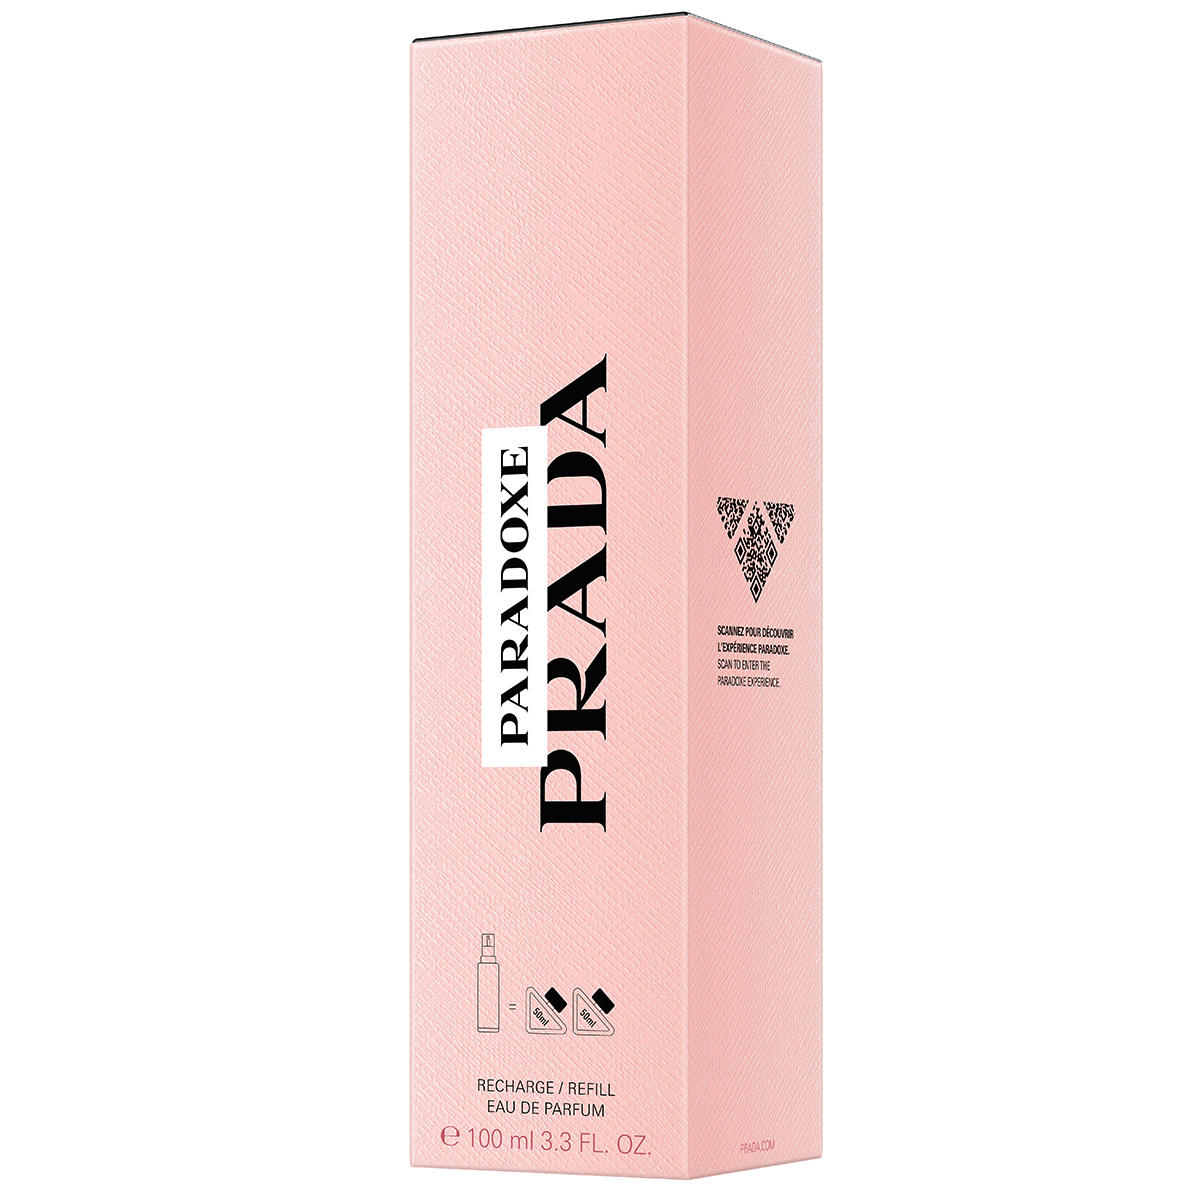 Prada Paradoxe Eau de Parfum Refill Pack 100 ml - 2